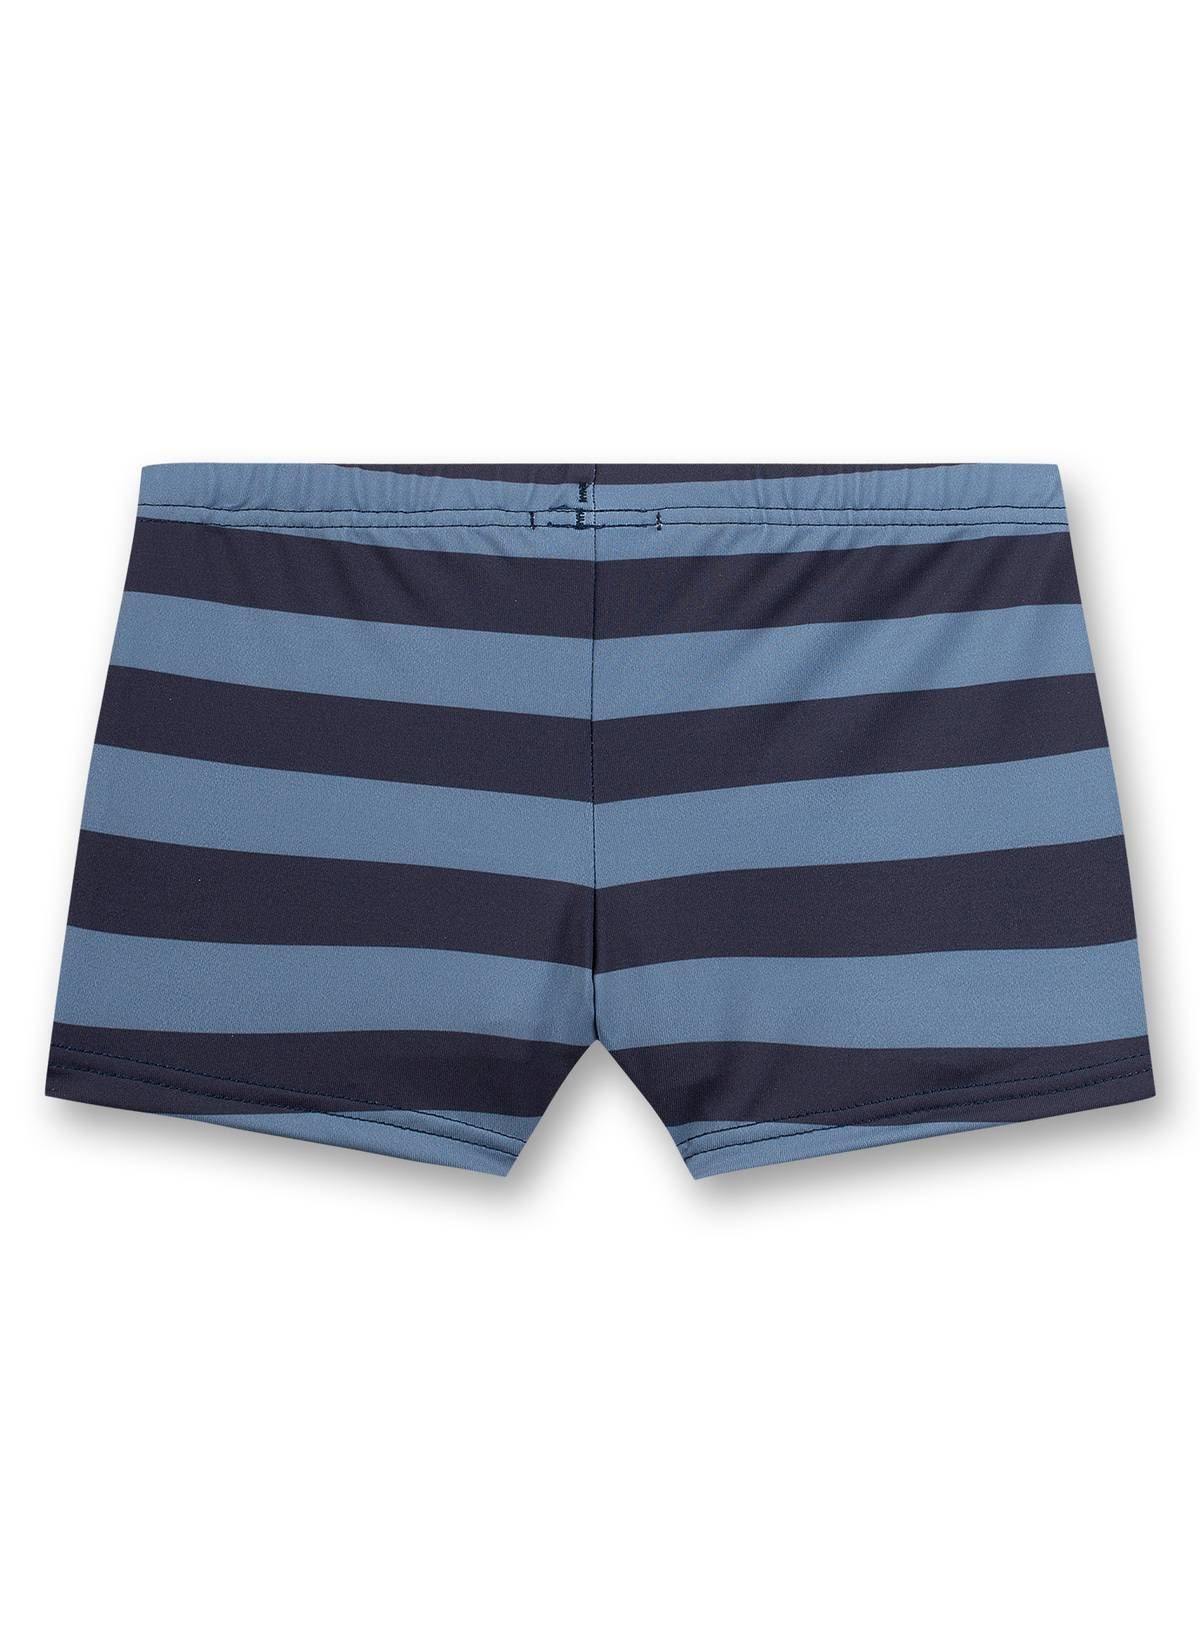 Kinder, Badehose Jungen UV - Shorts, Mittelblau 50+ Pants, Sanetta Badehose